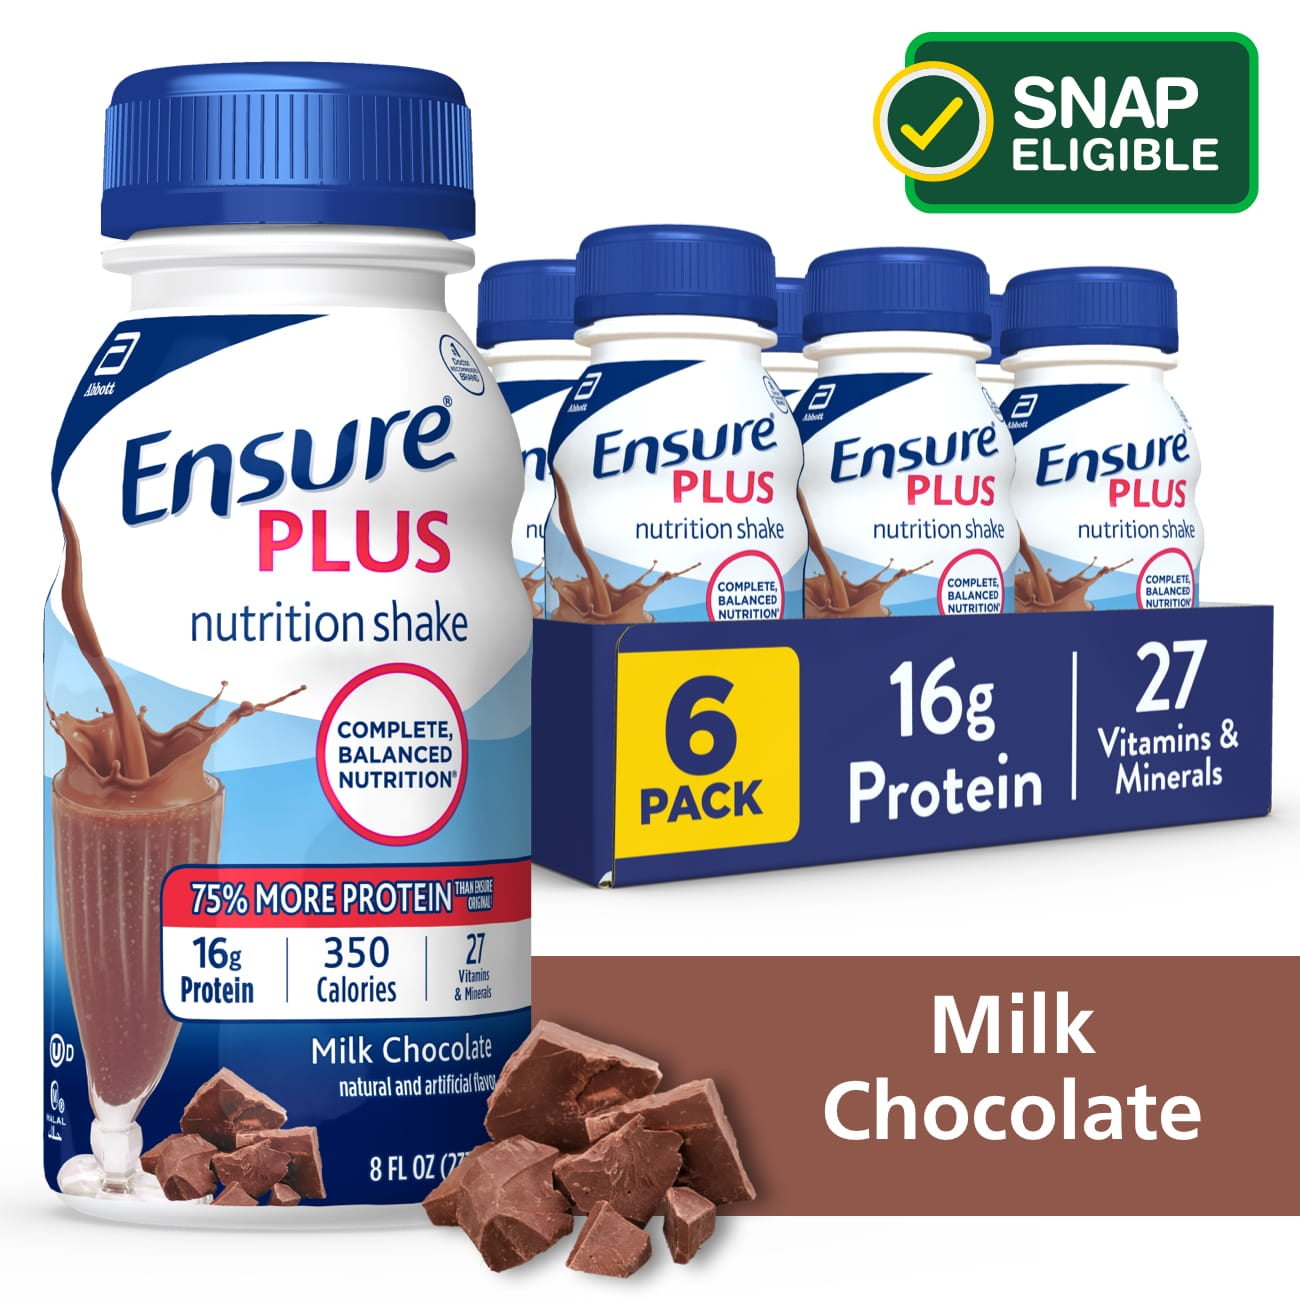 Ensure Plus Nutrition Shake, Milk Chocolate, 8 fl oz, 6 Bottles